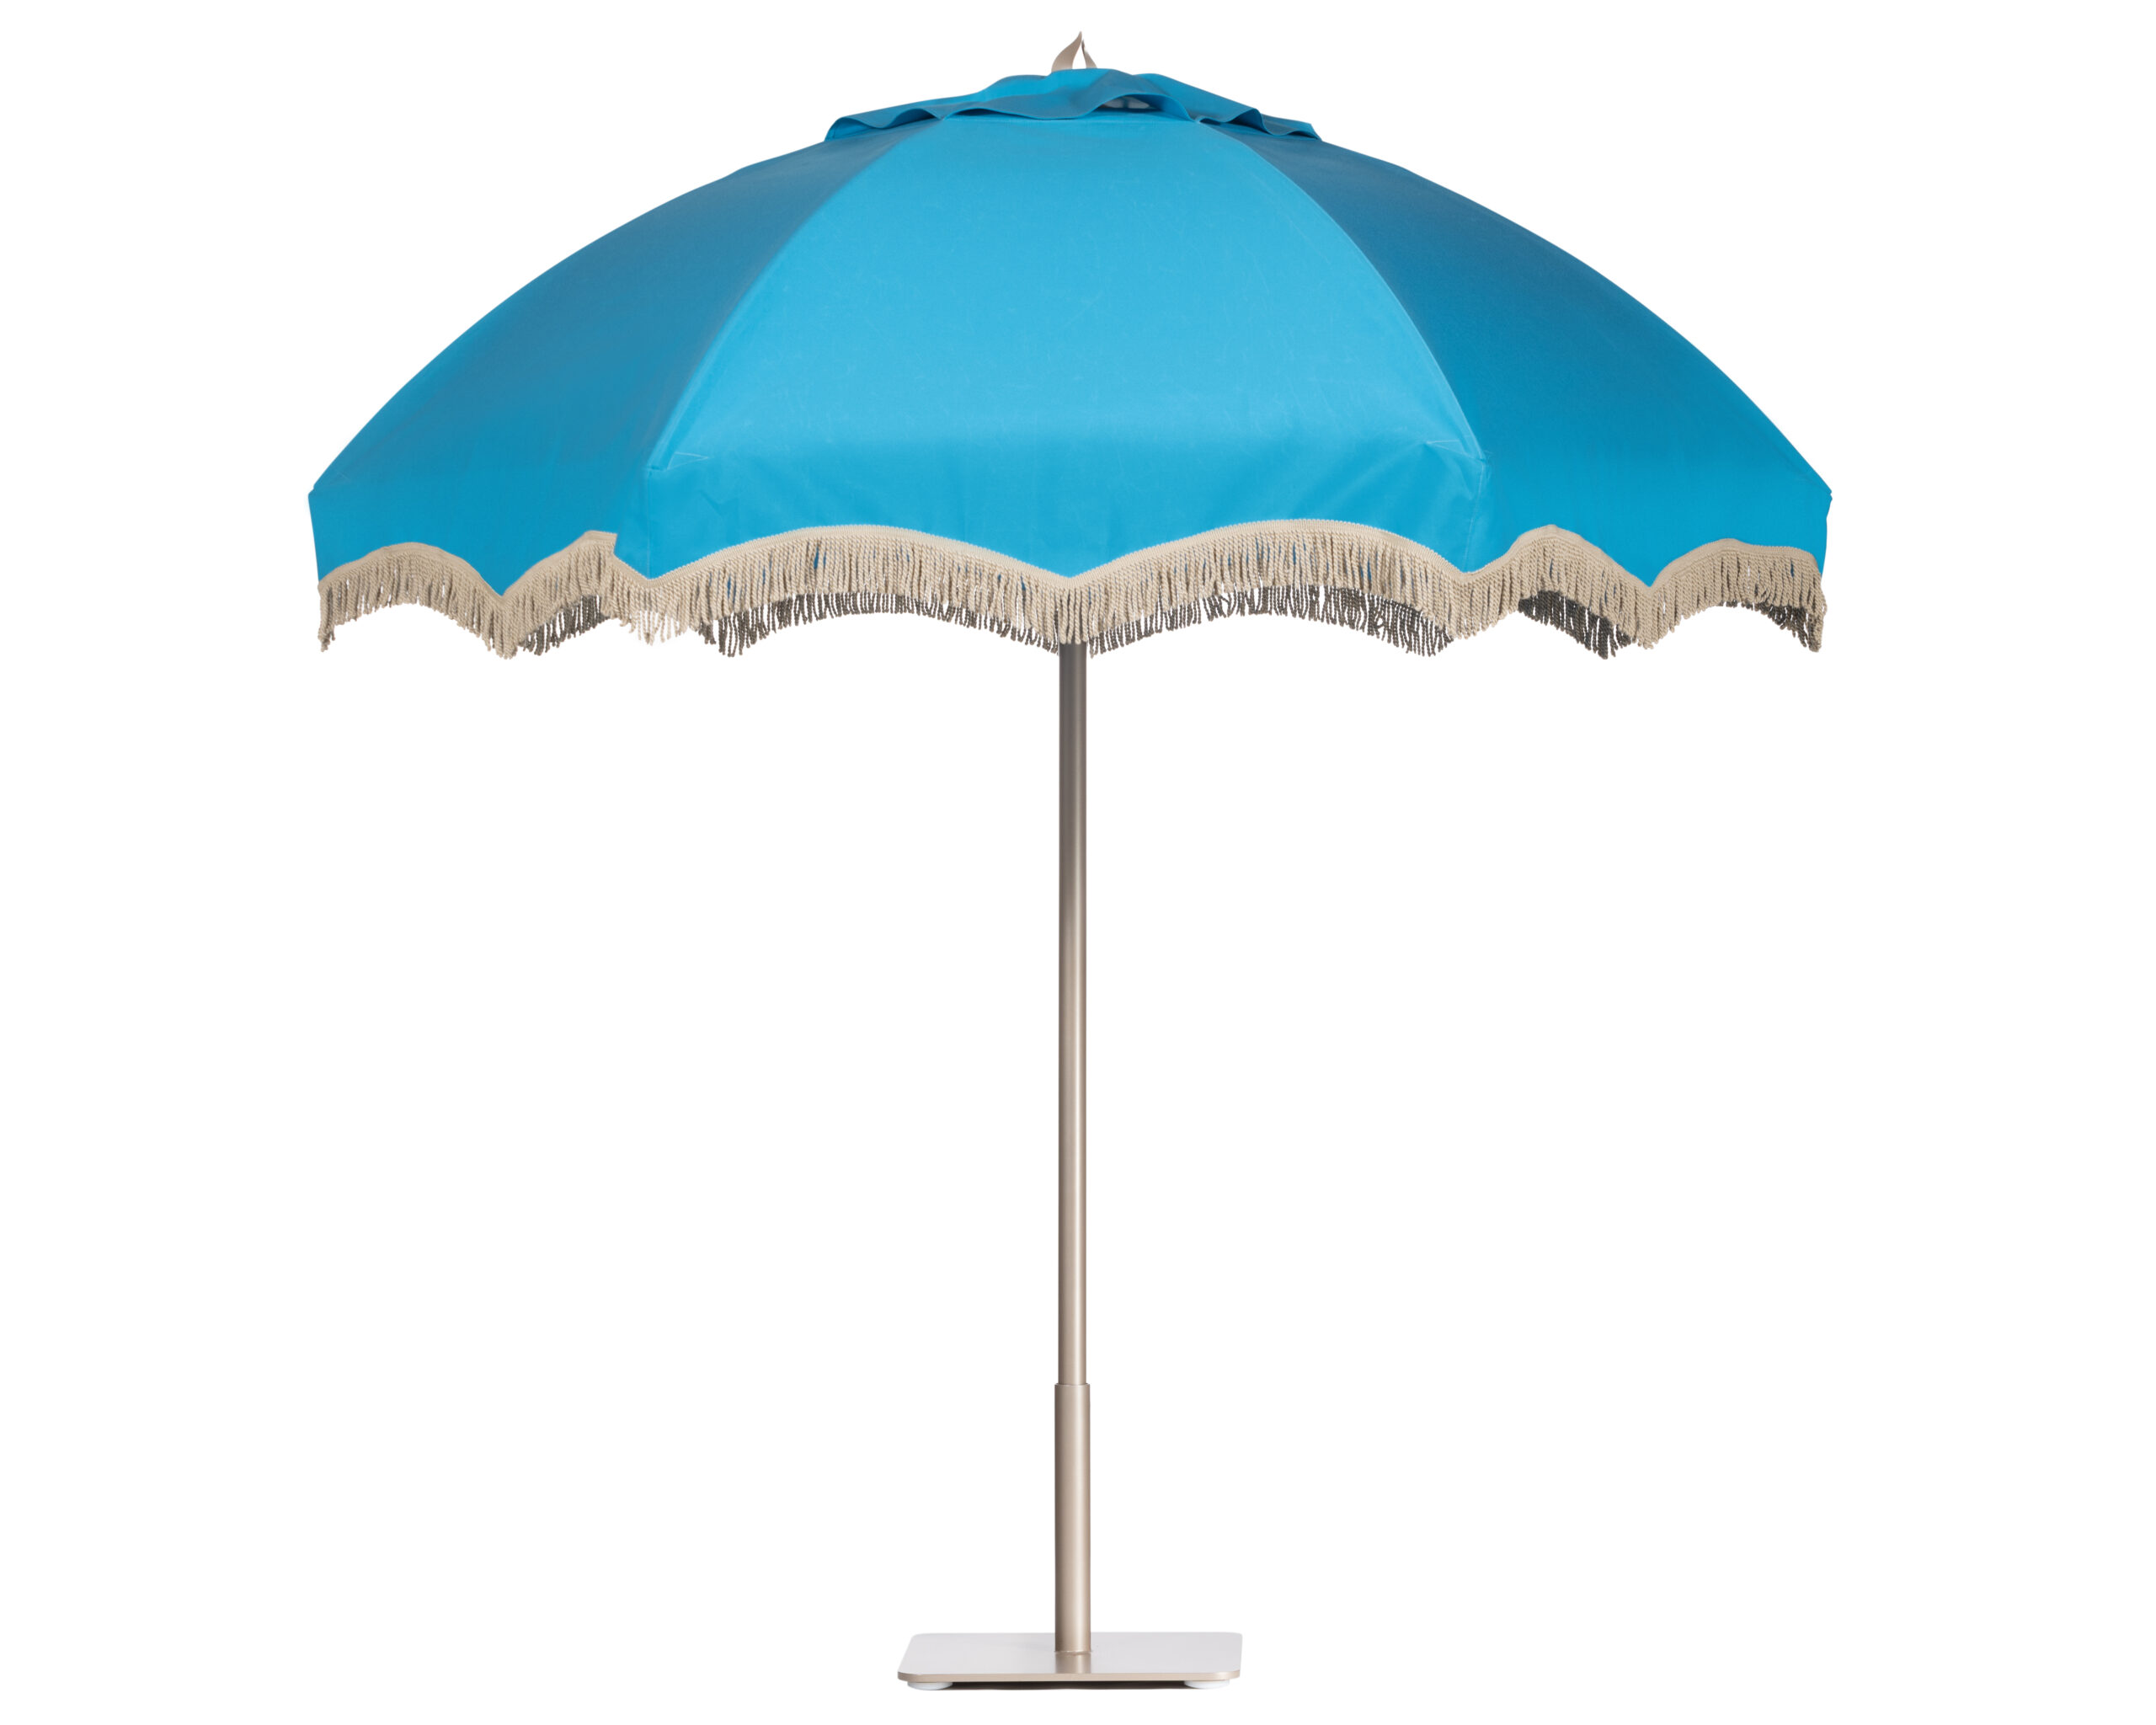 Image of umbrella with Regency valance